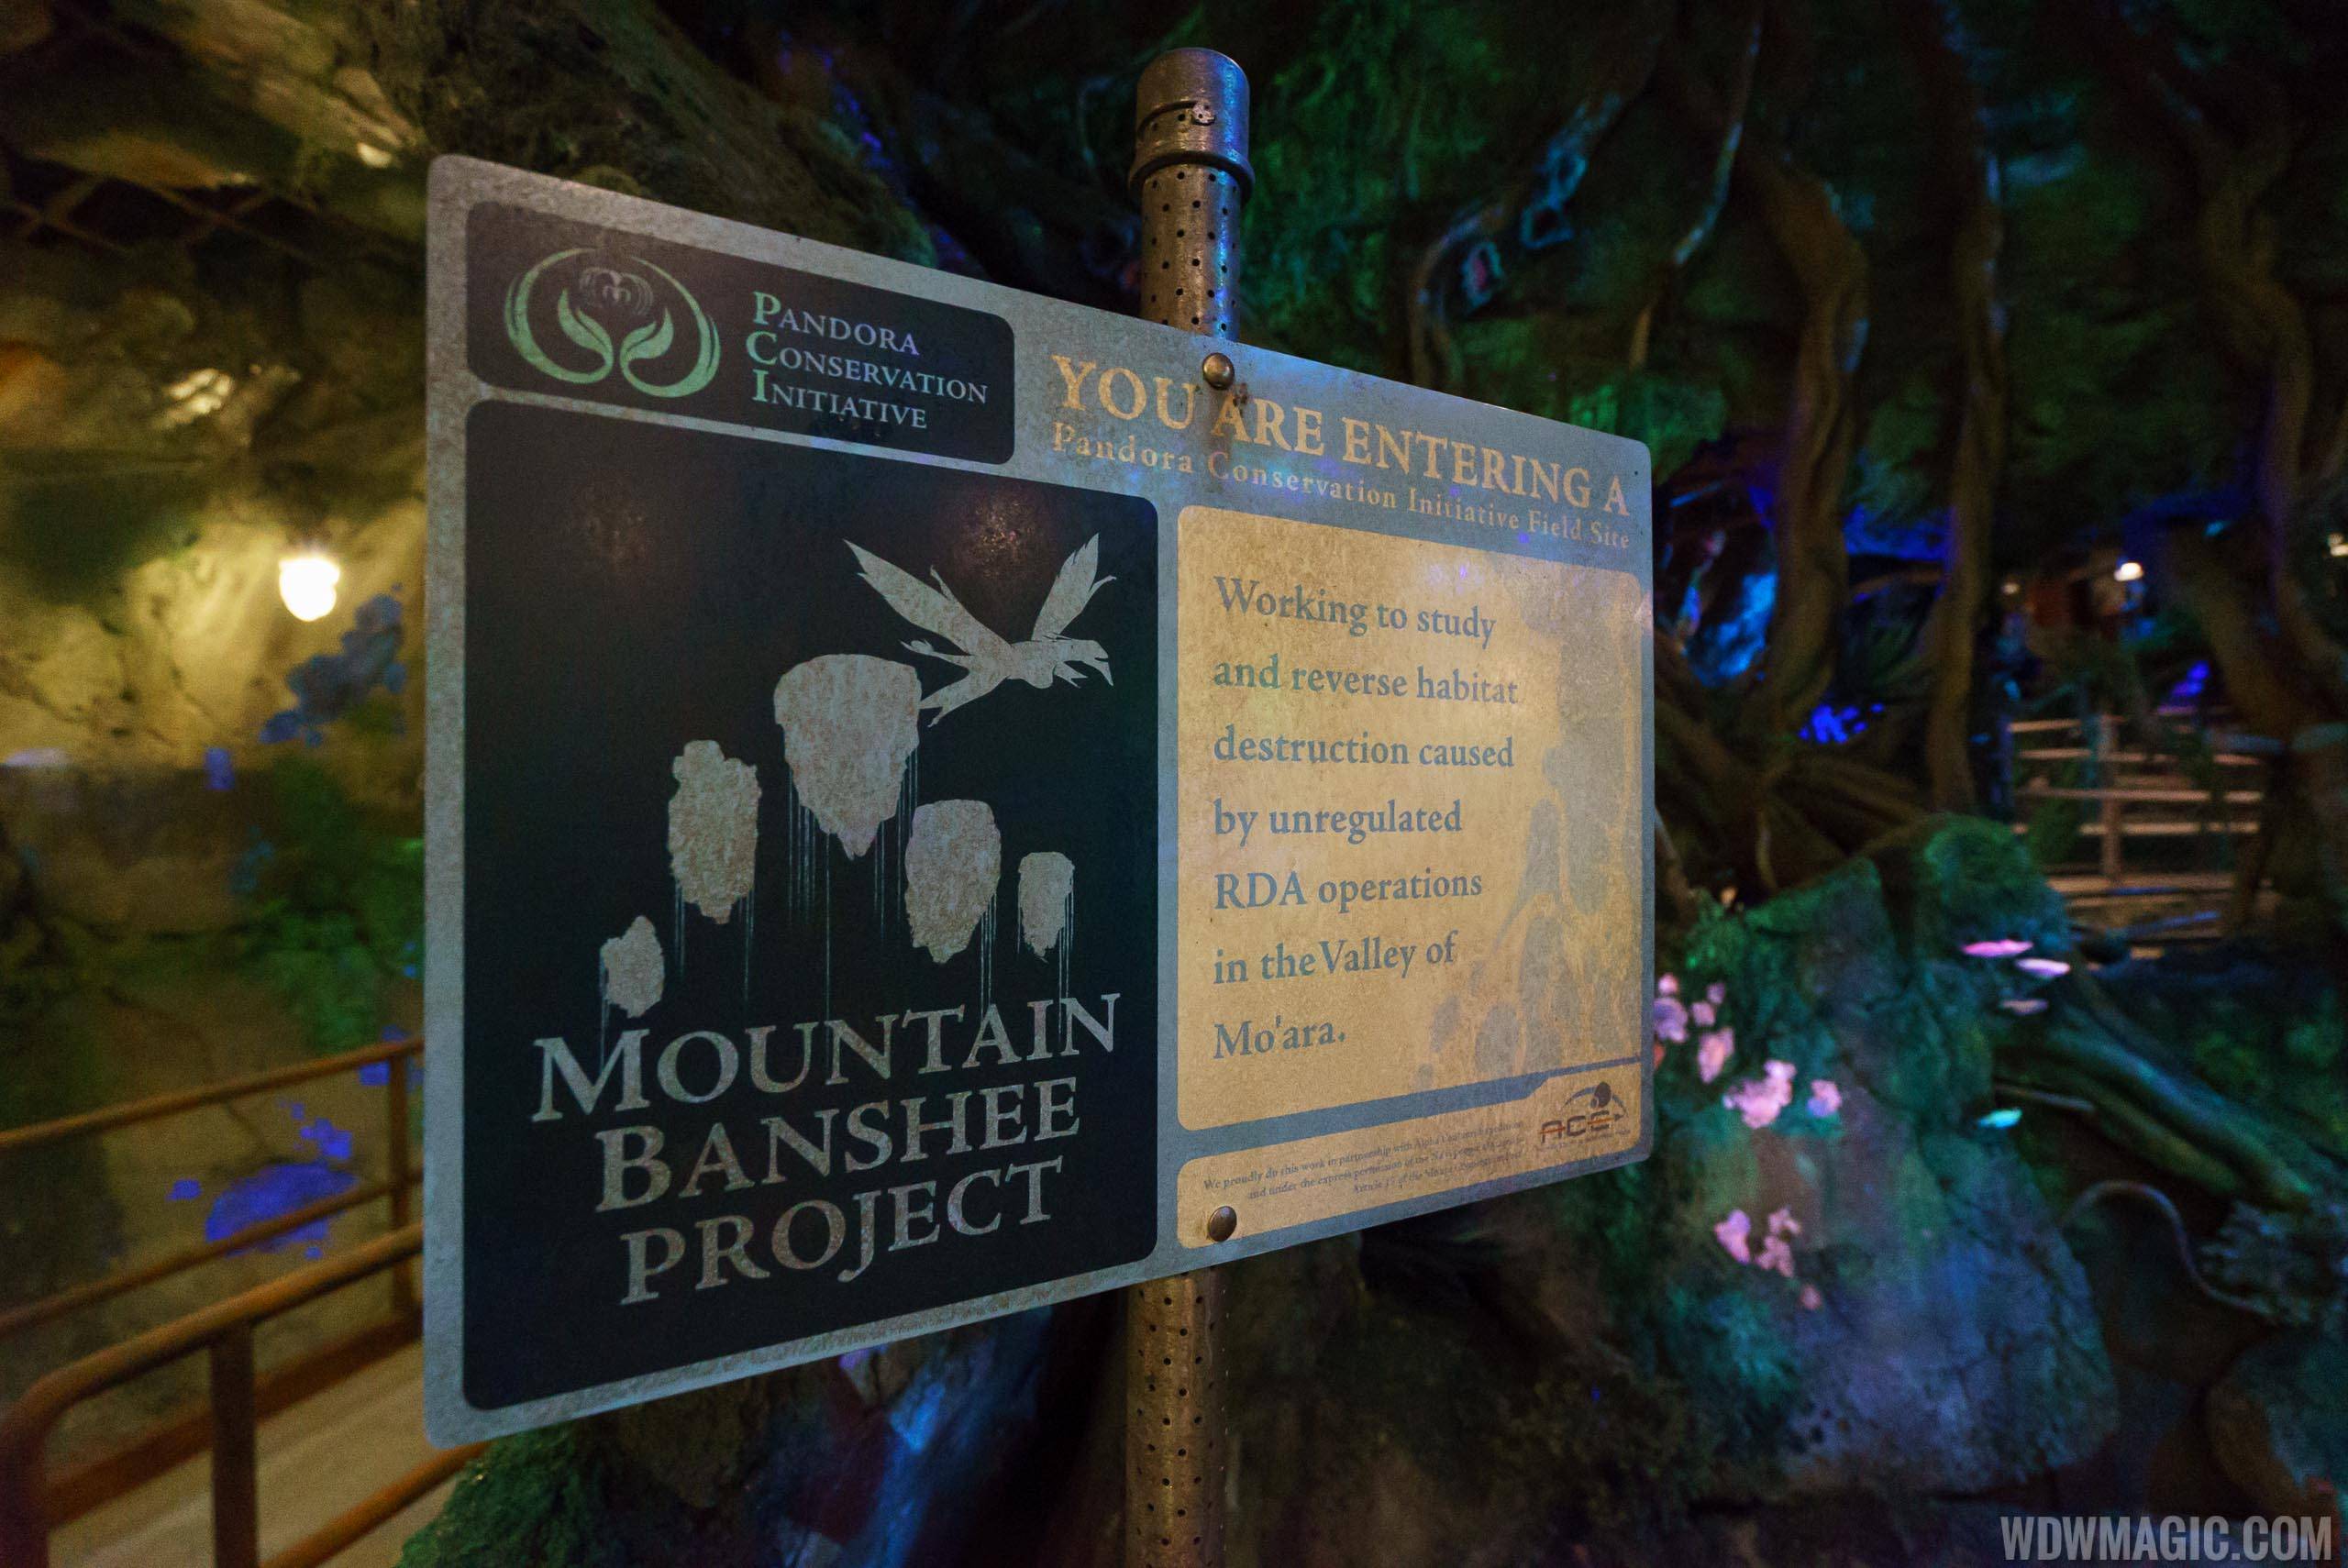 Avatar Flight of Passage queue - Mountain Banshee Project sign